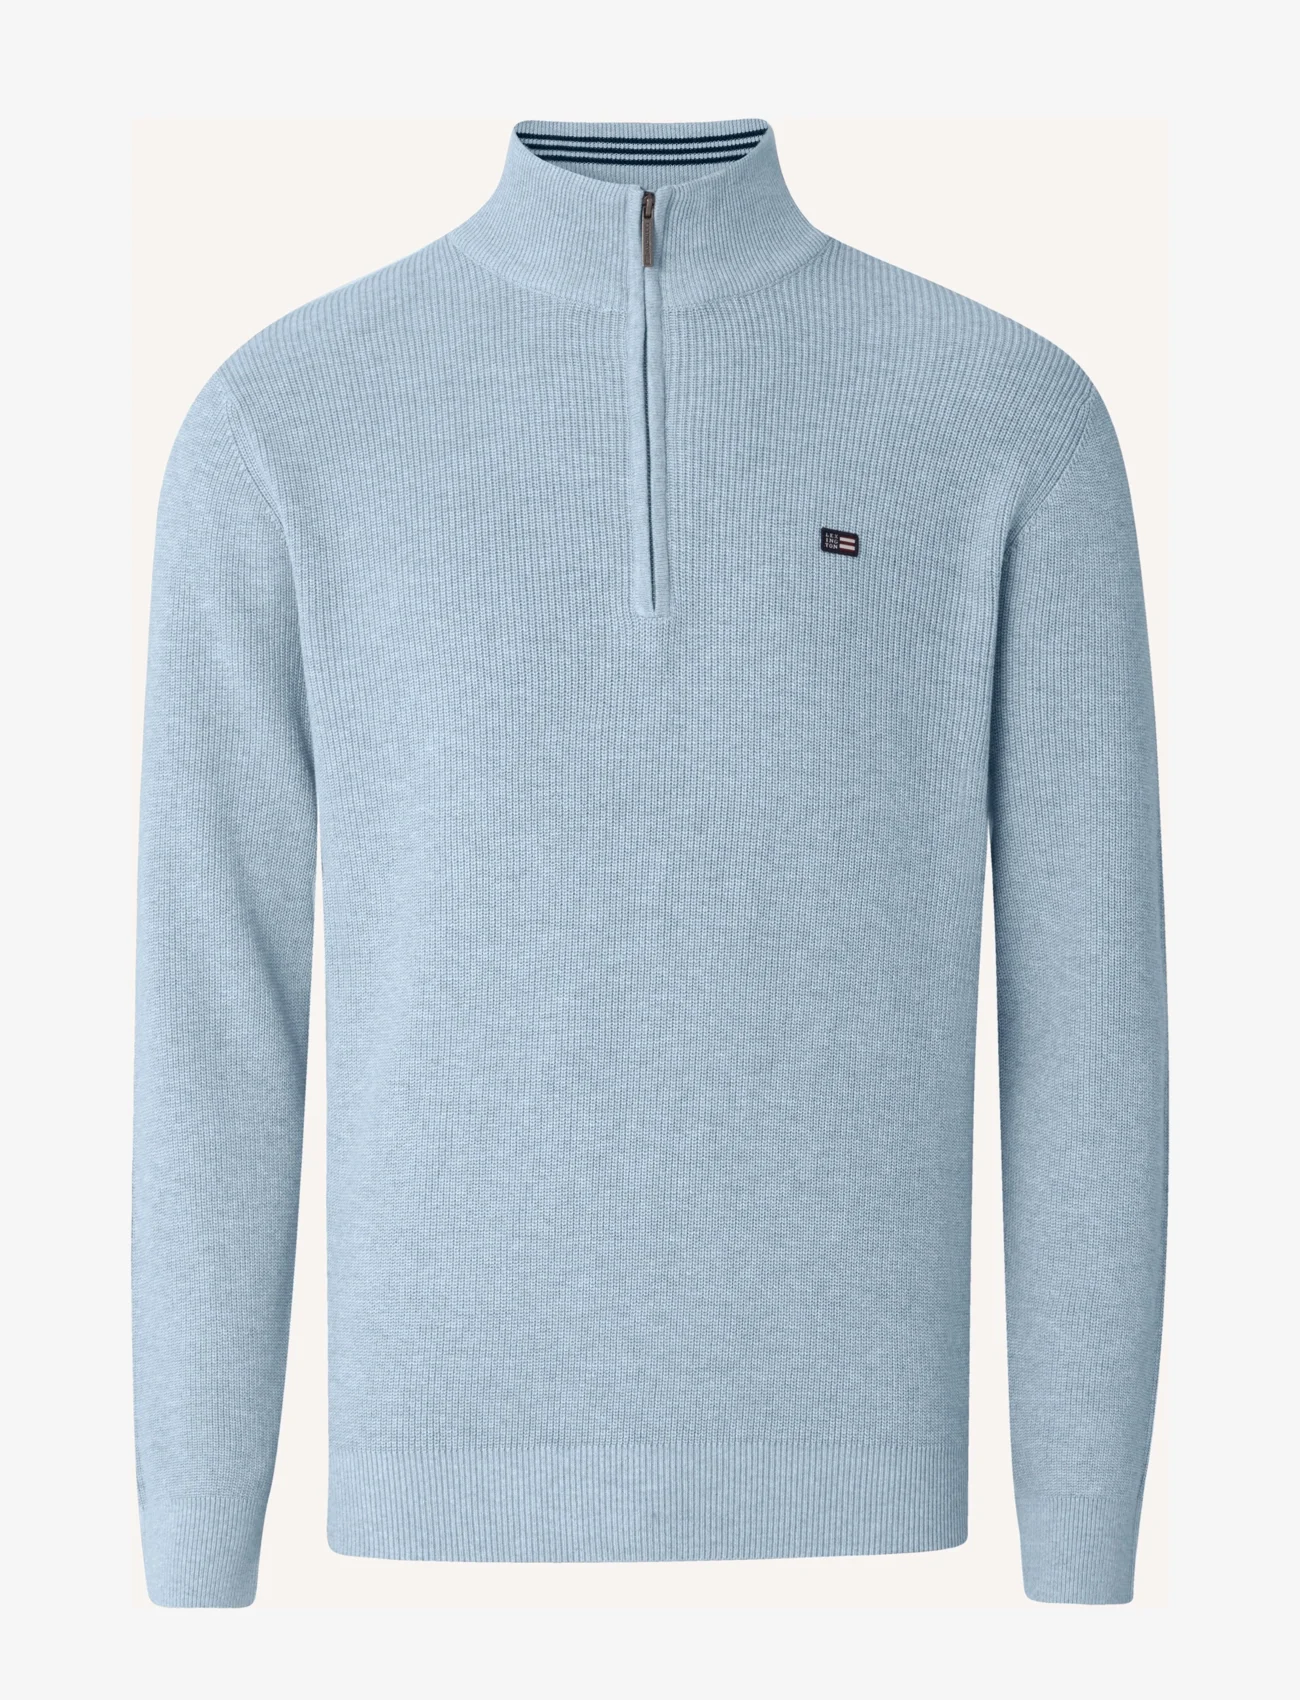 Lexington Clothing - Clay Cotton Half-Zip Sweater - menn - light blue - 0